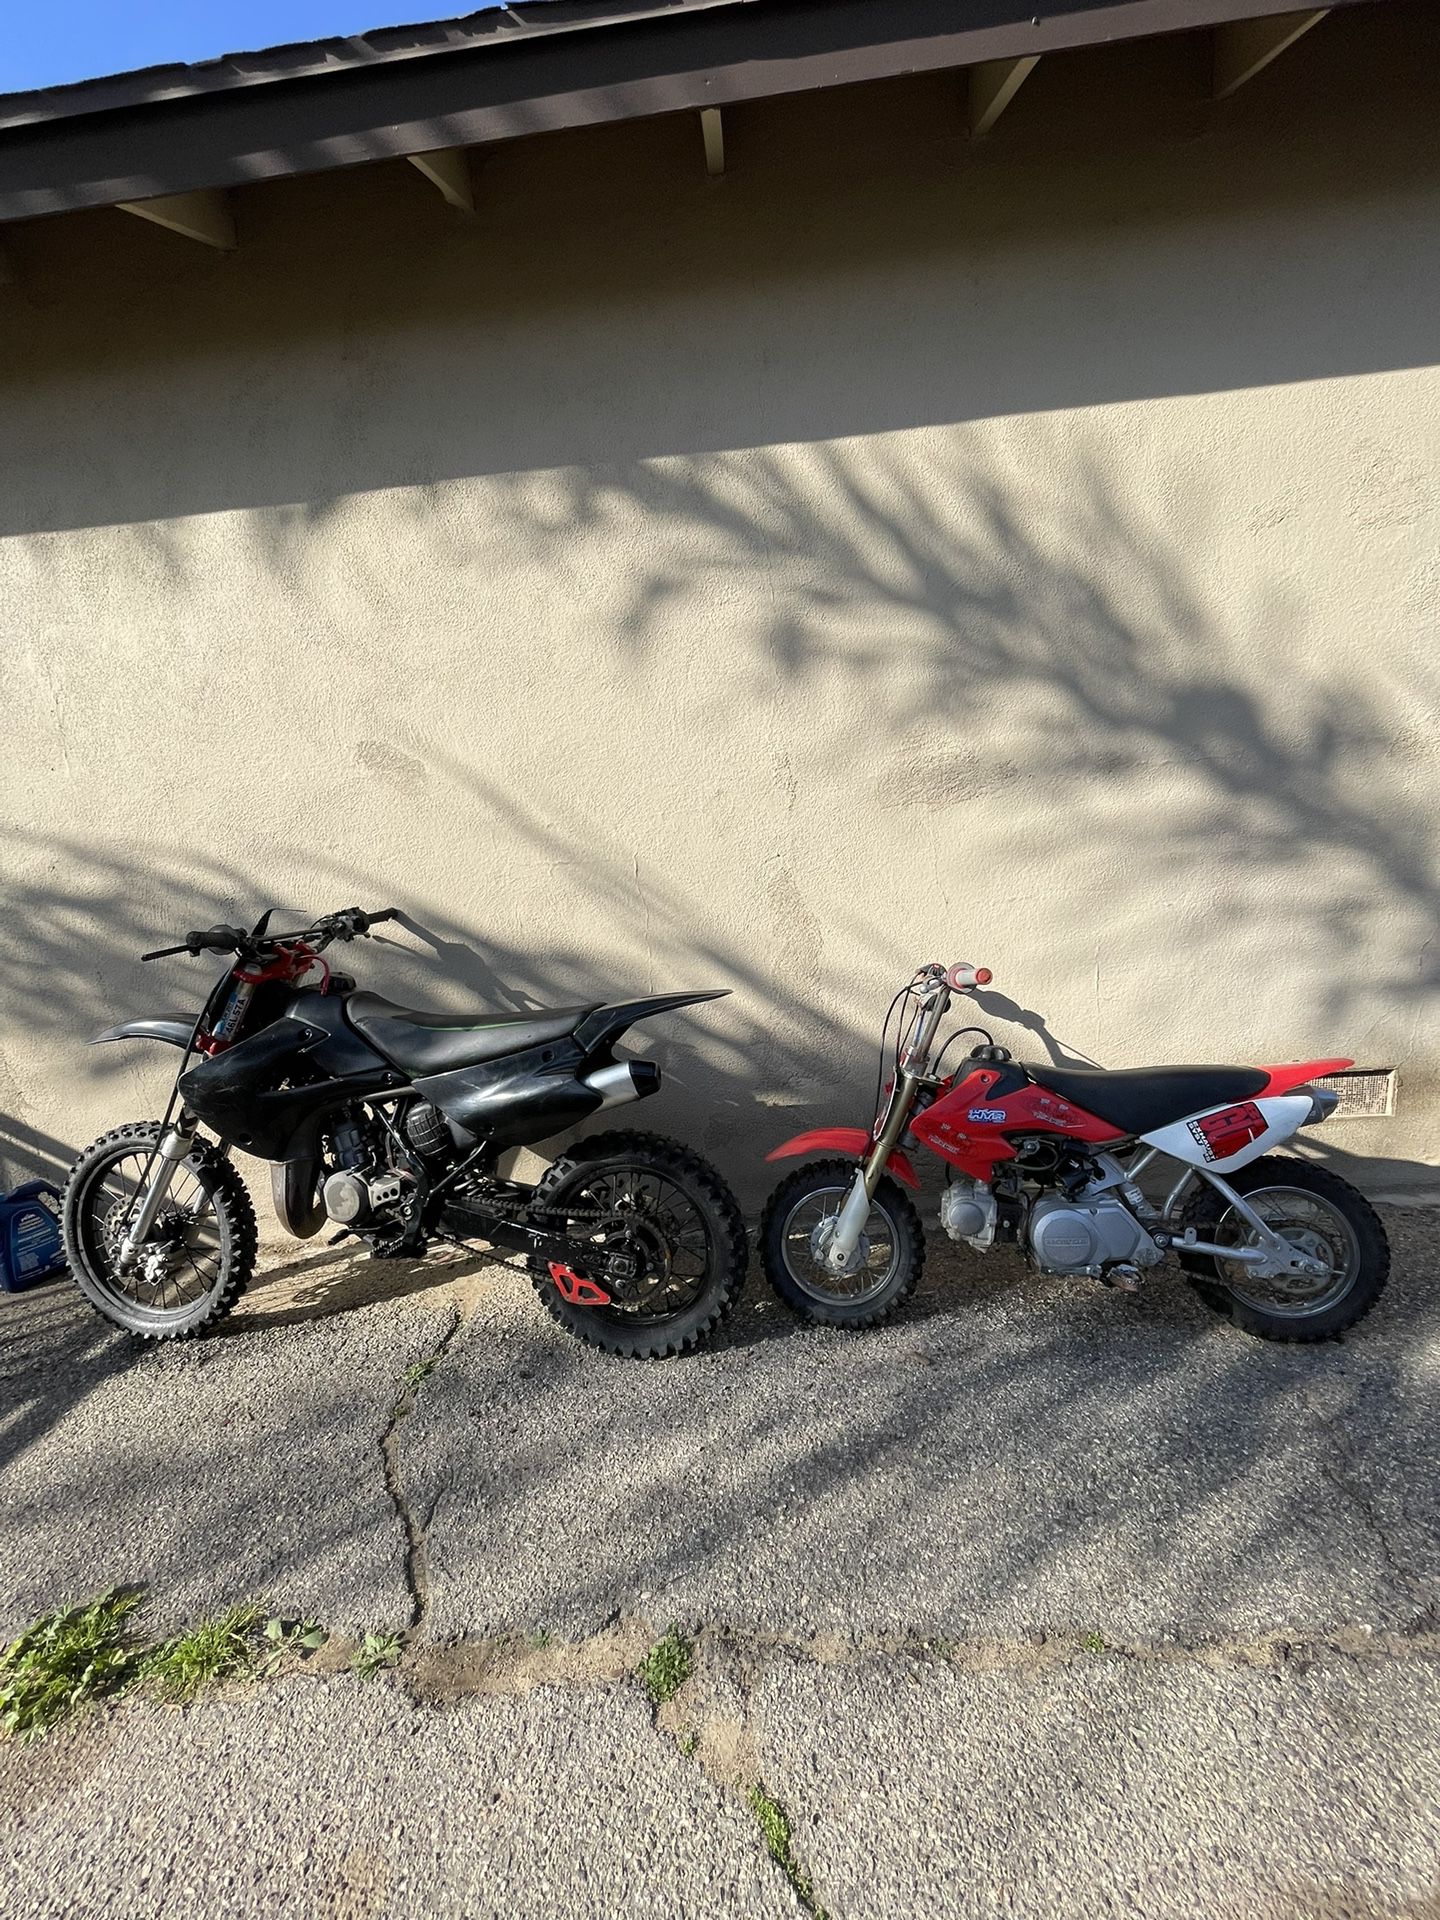 2 Dirt bikes Kx85 Crf50 Need Gone ASAP 